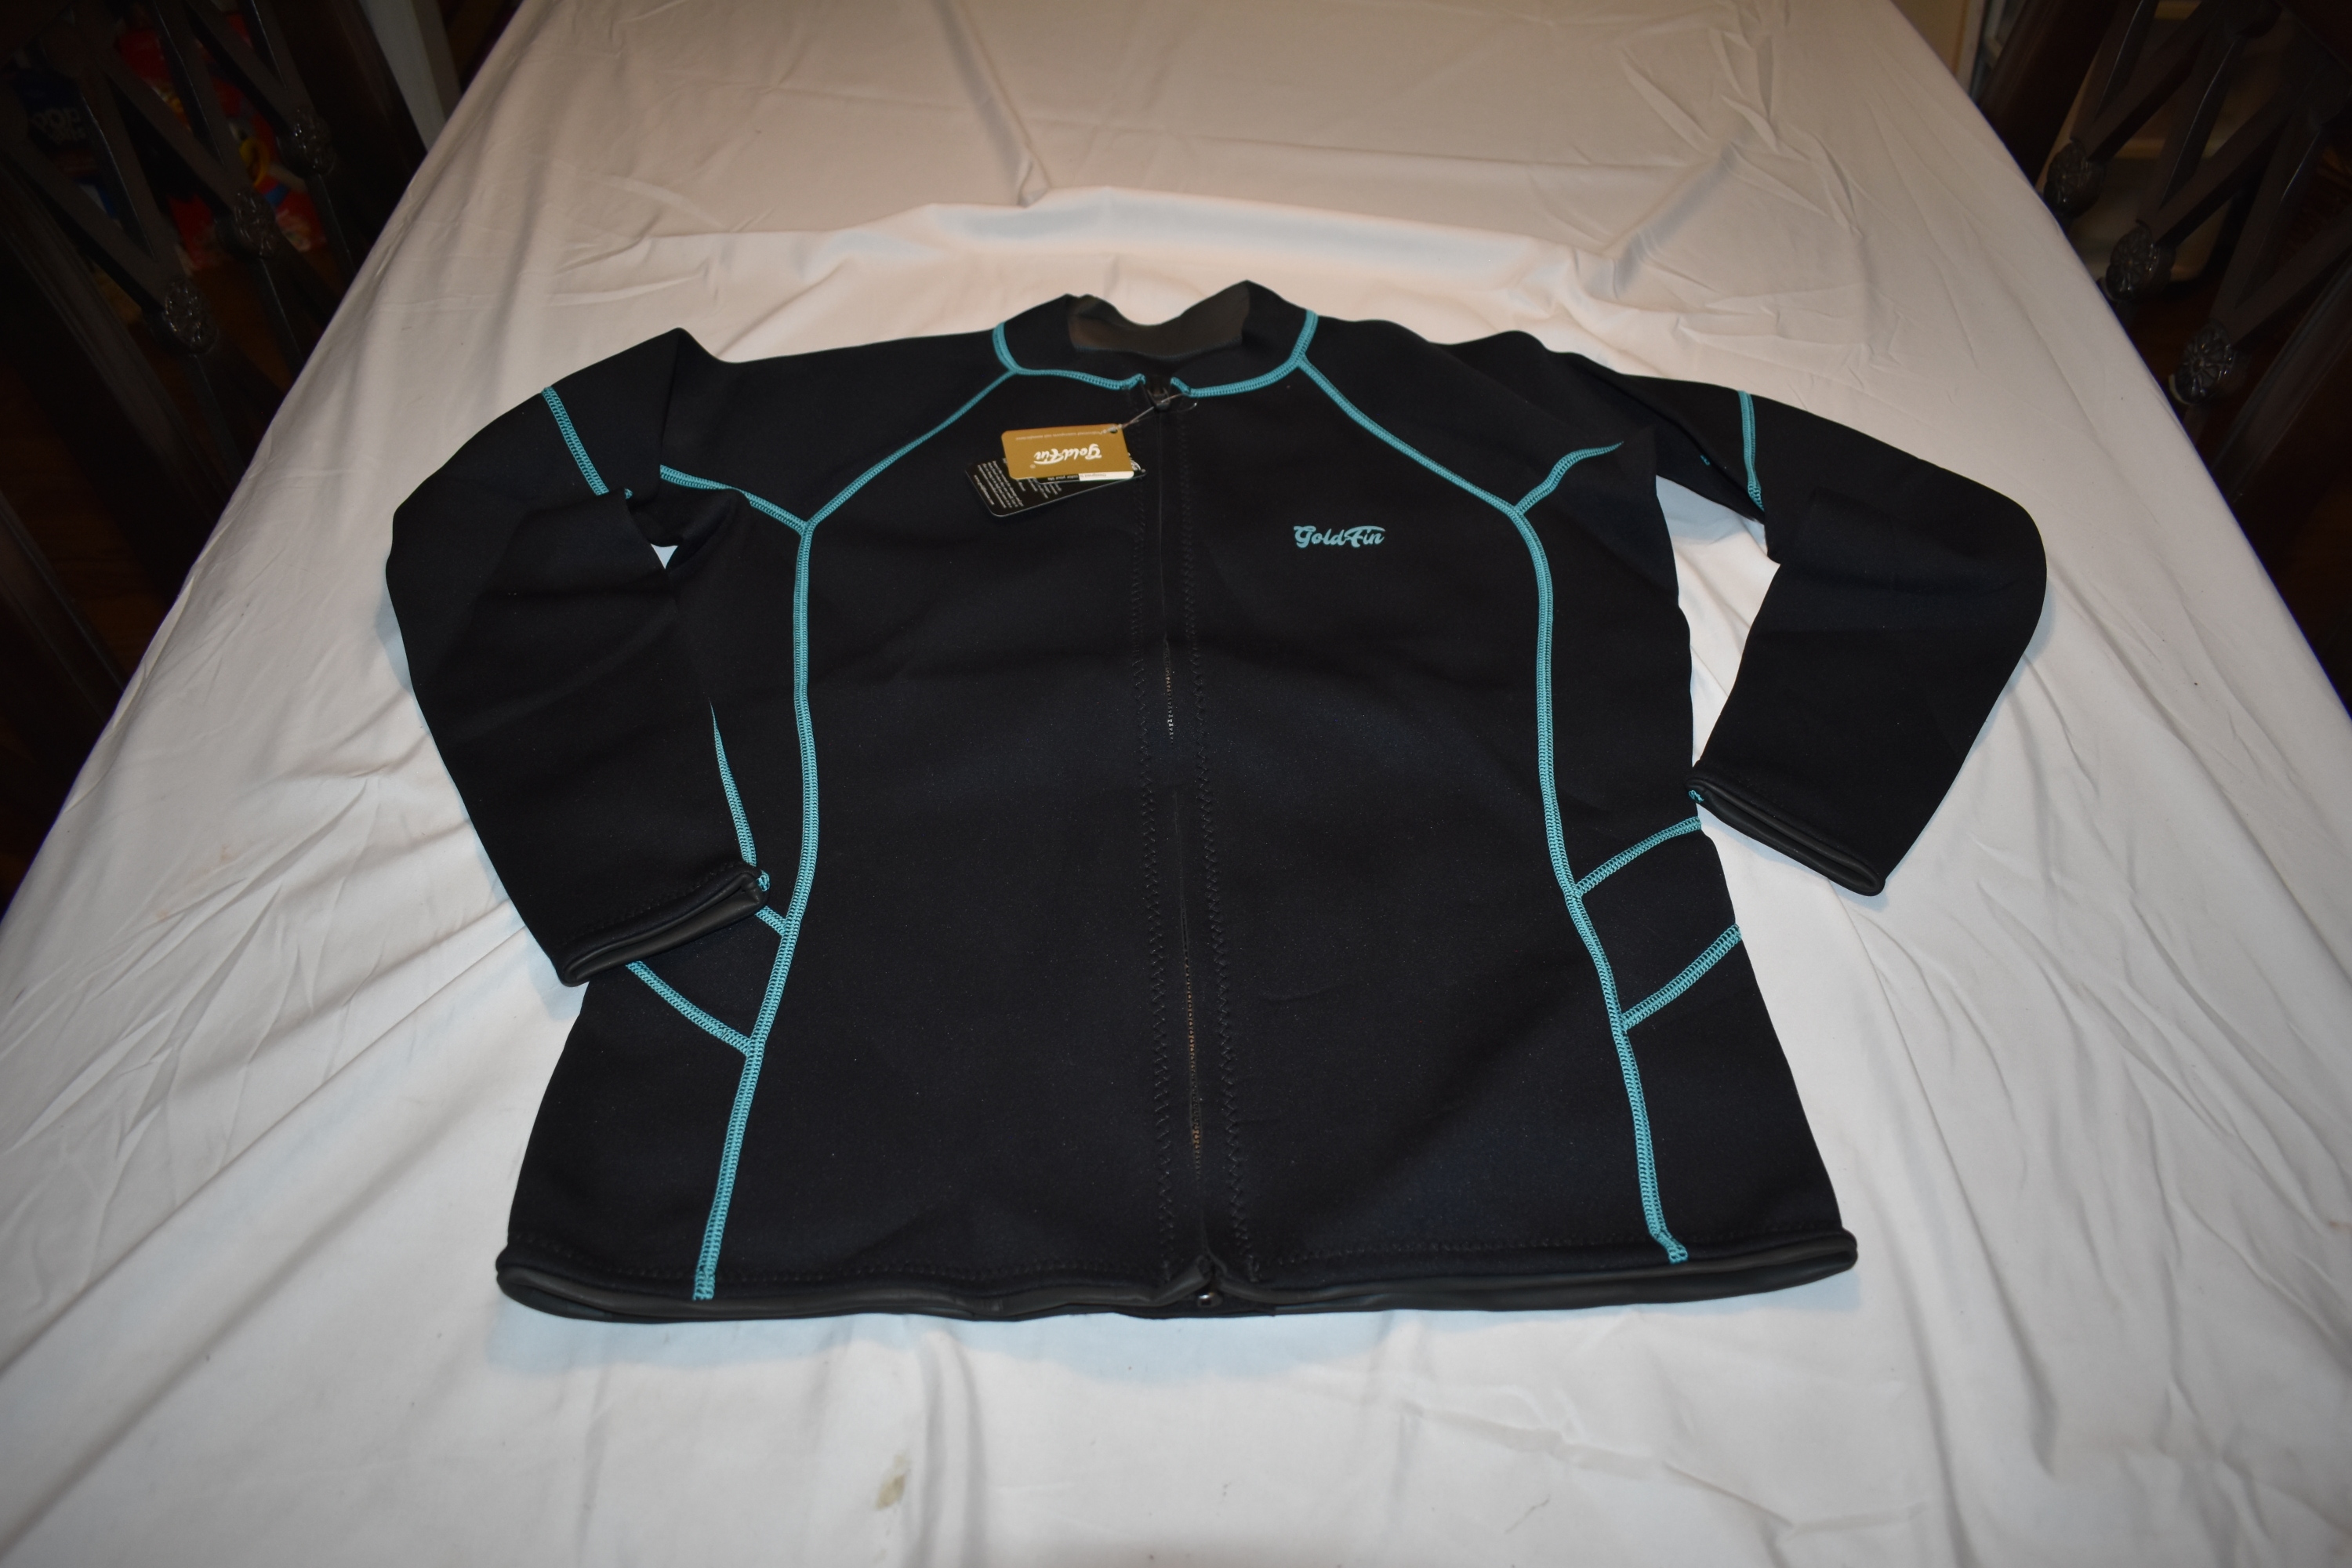 NEW - Realon Springsuit 3-XL Wetsuit, Black/Gray